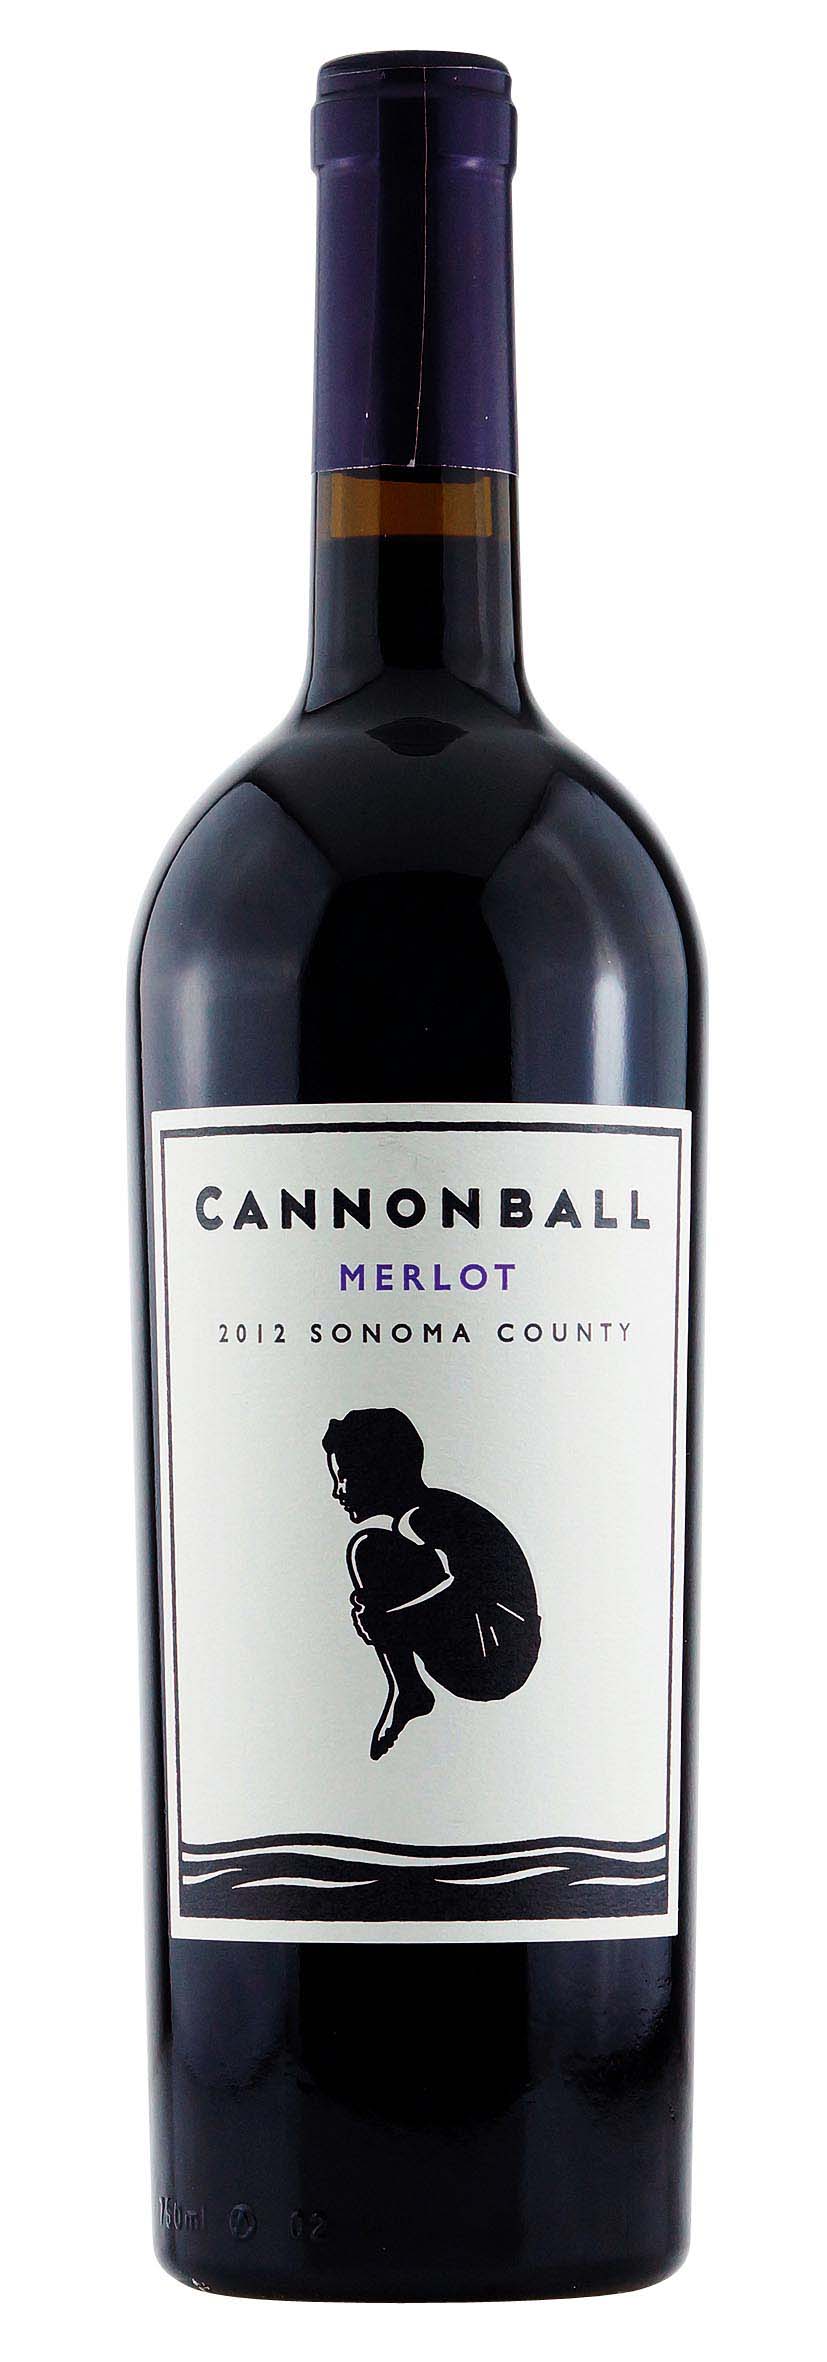 Cannonball Merlot Sonoma County 2012